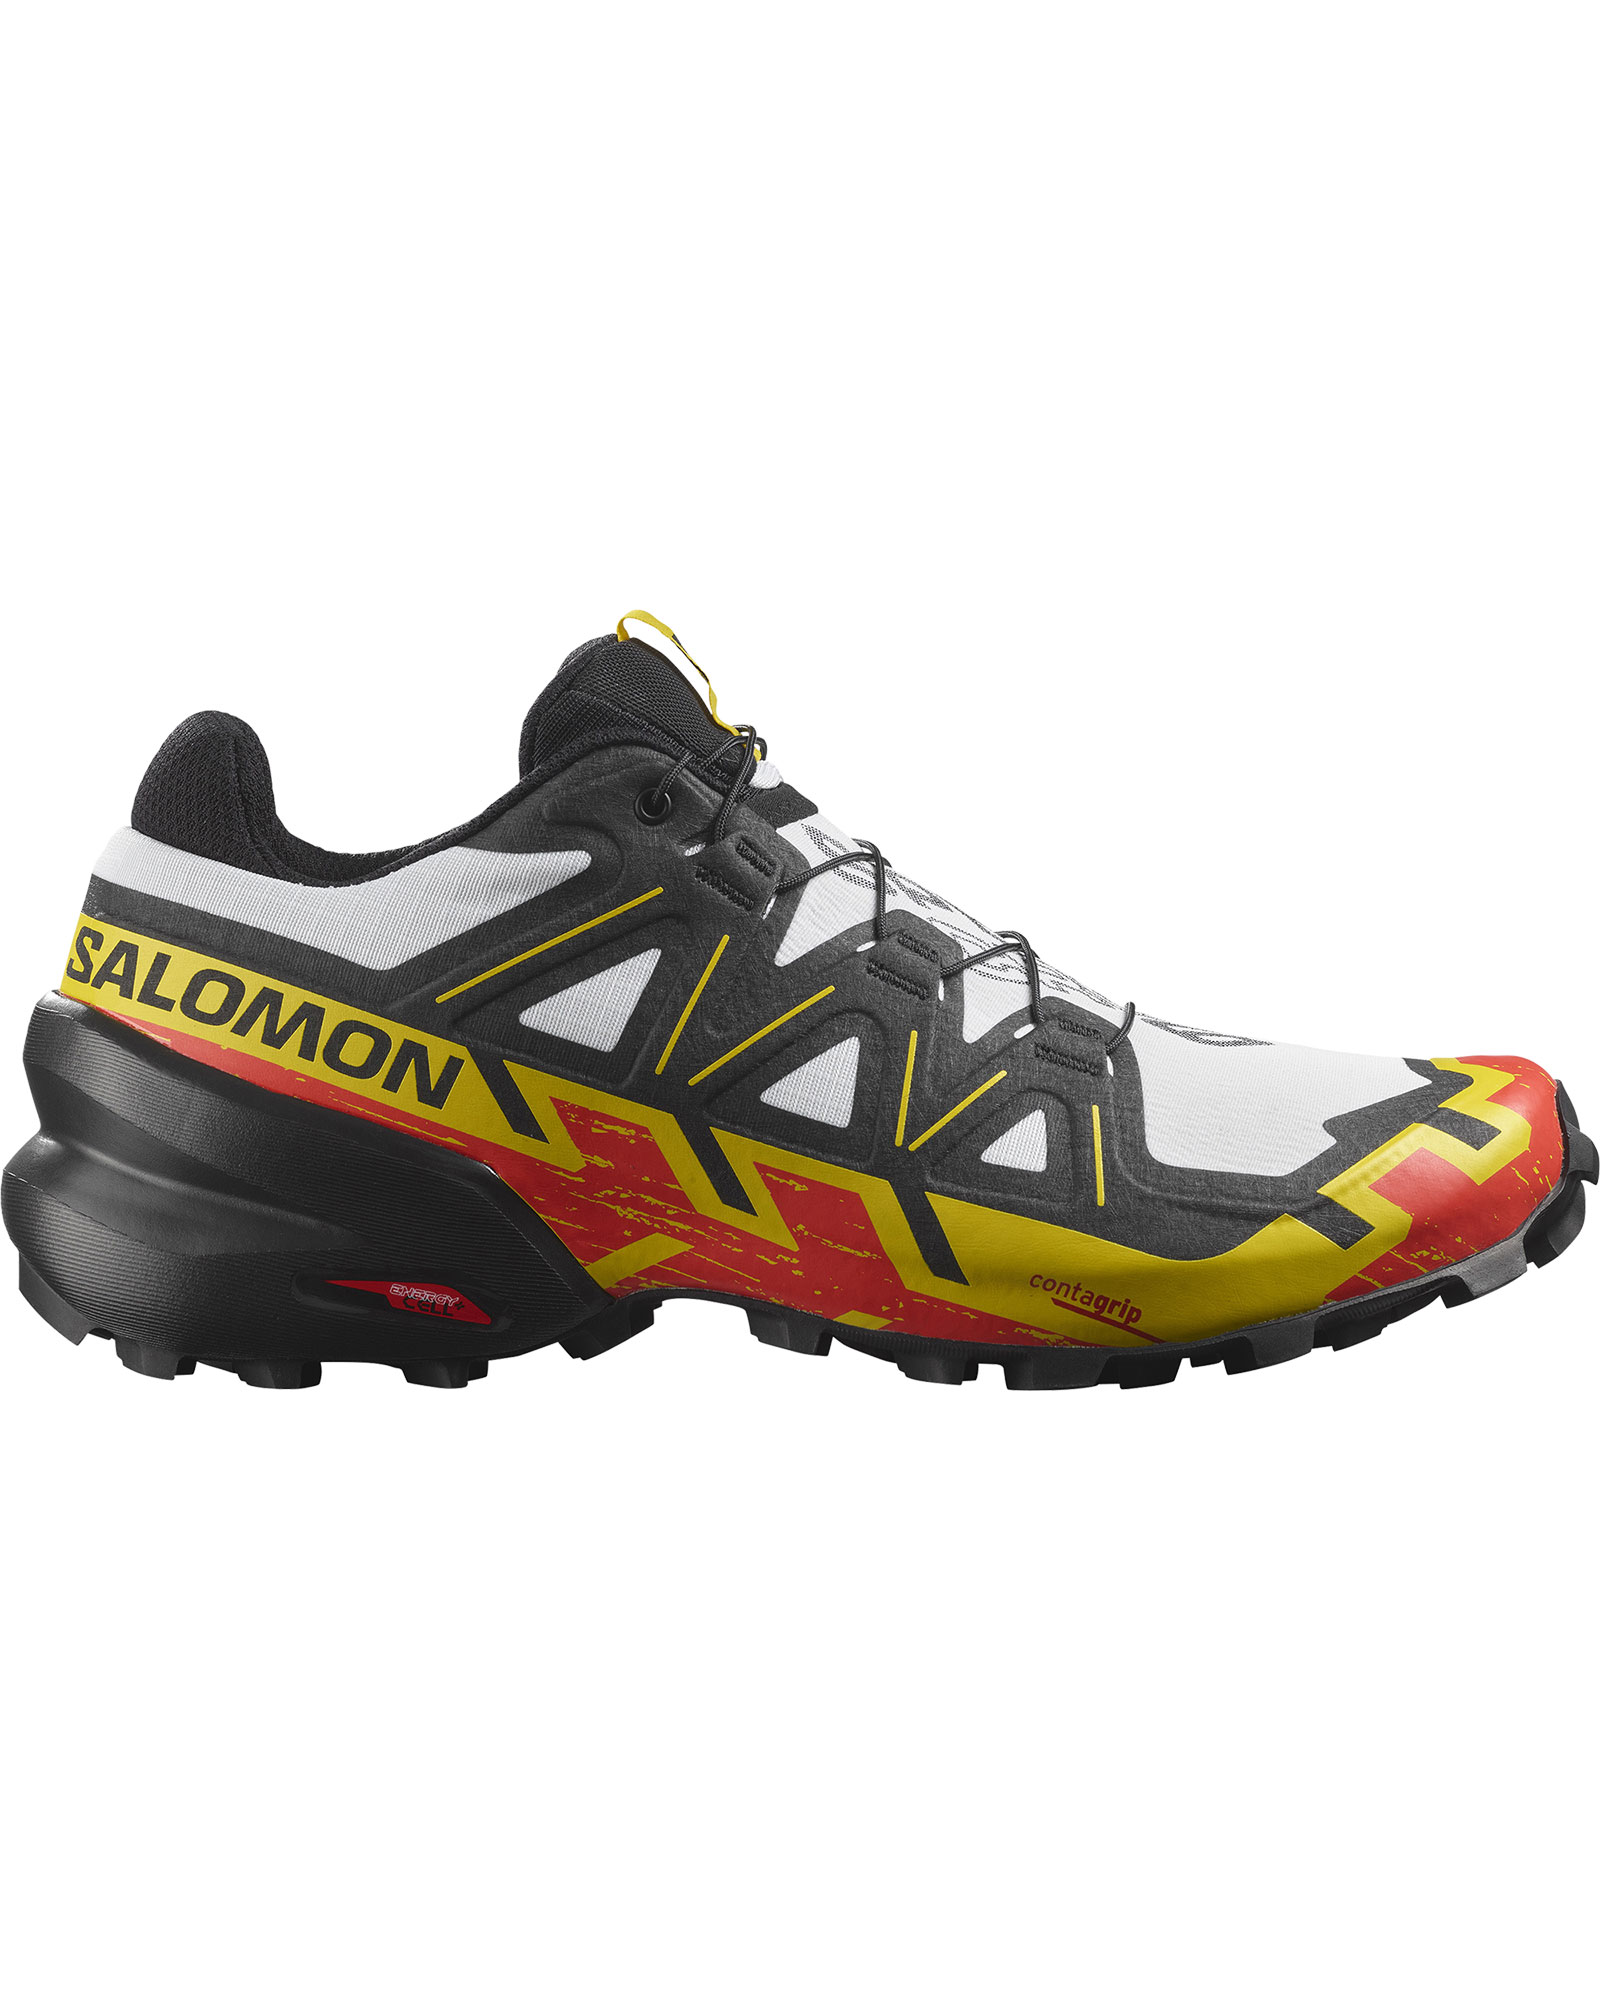 Salomon Speedcross 6 Men’s Shoes - White/Black/Empire Yellow UK 7.5